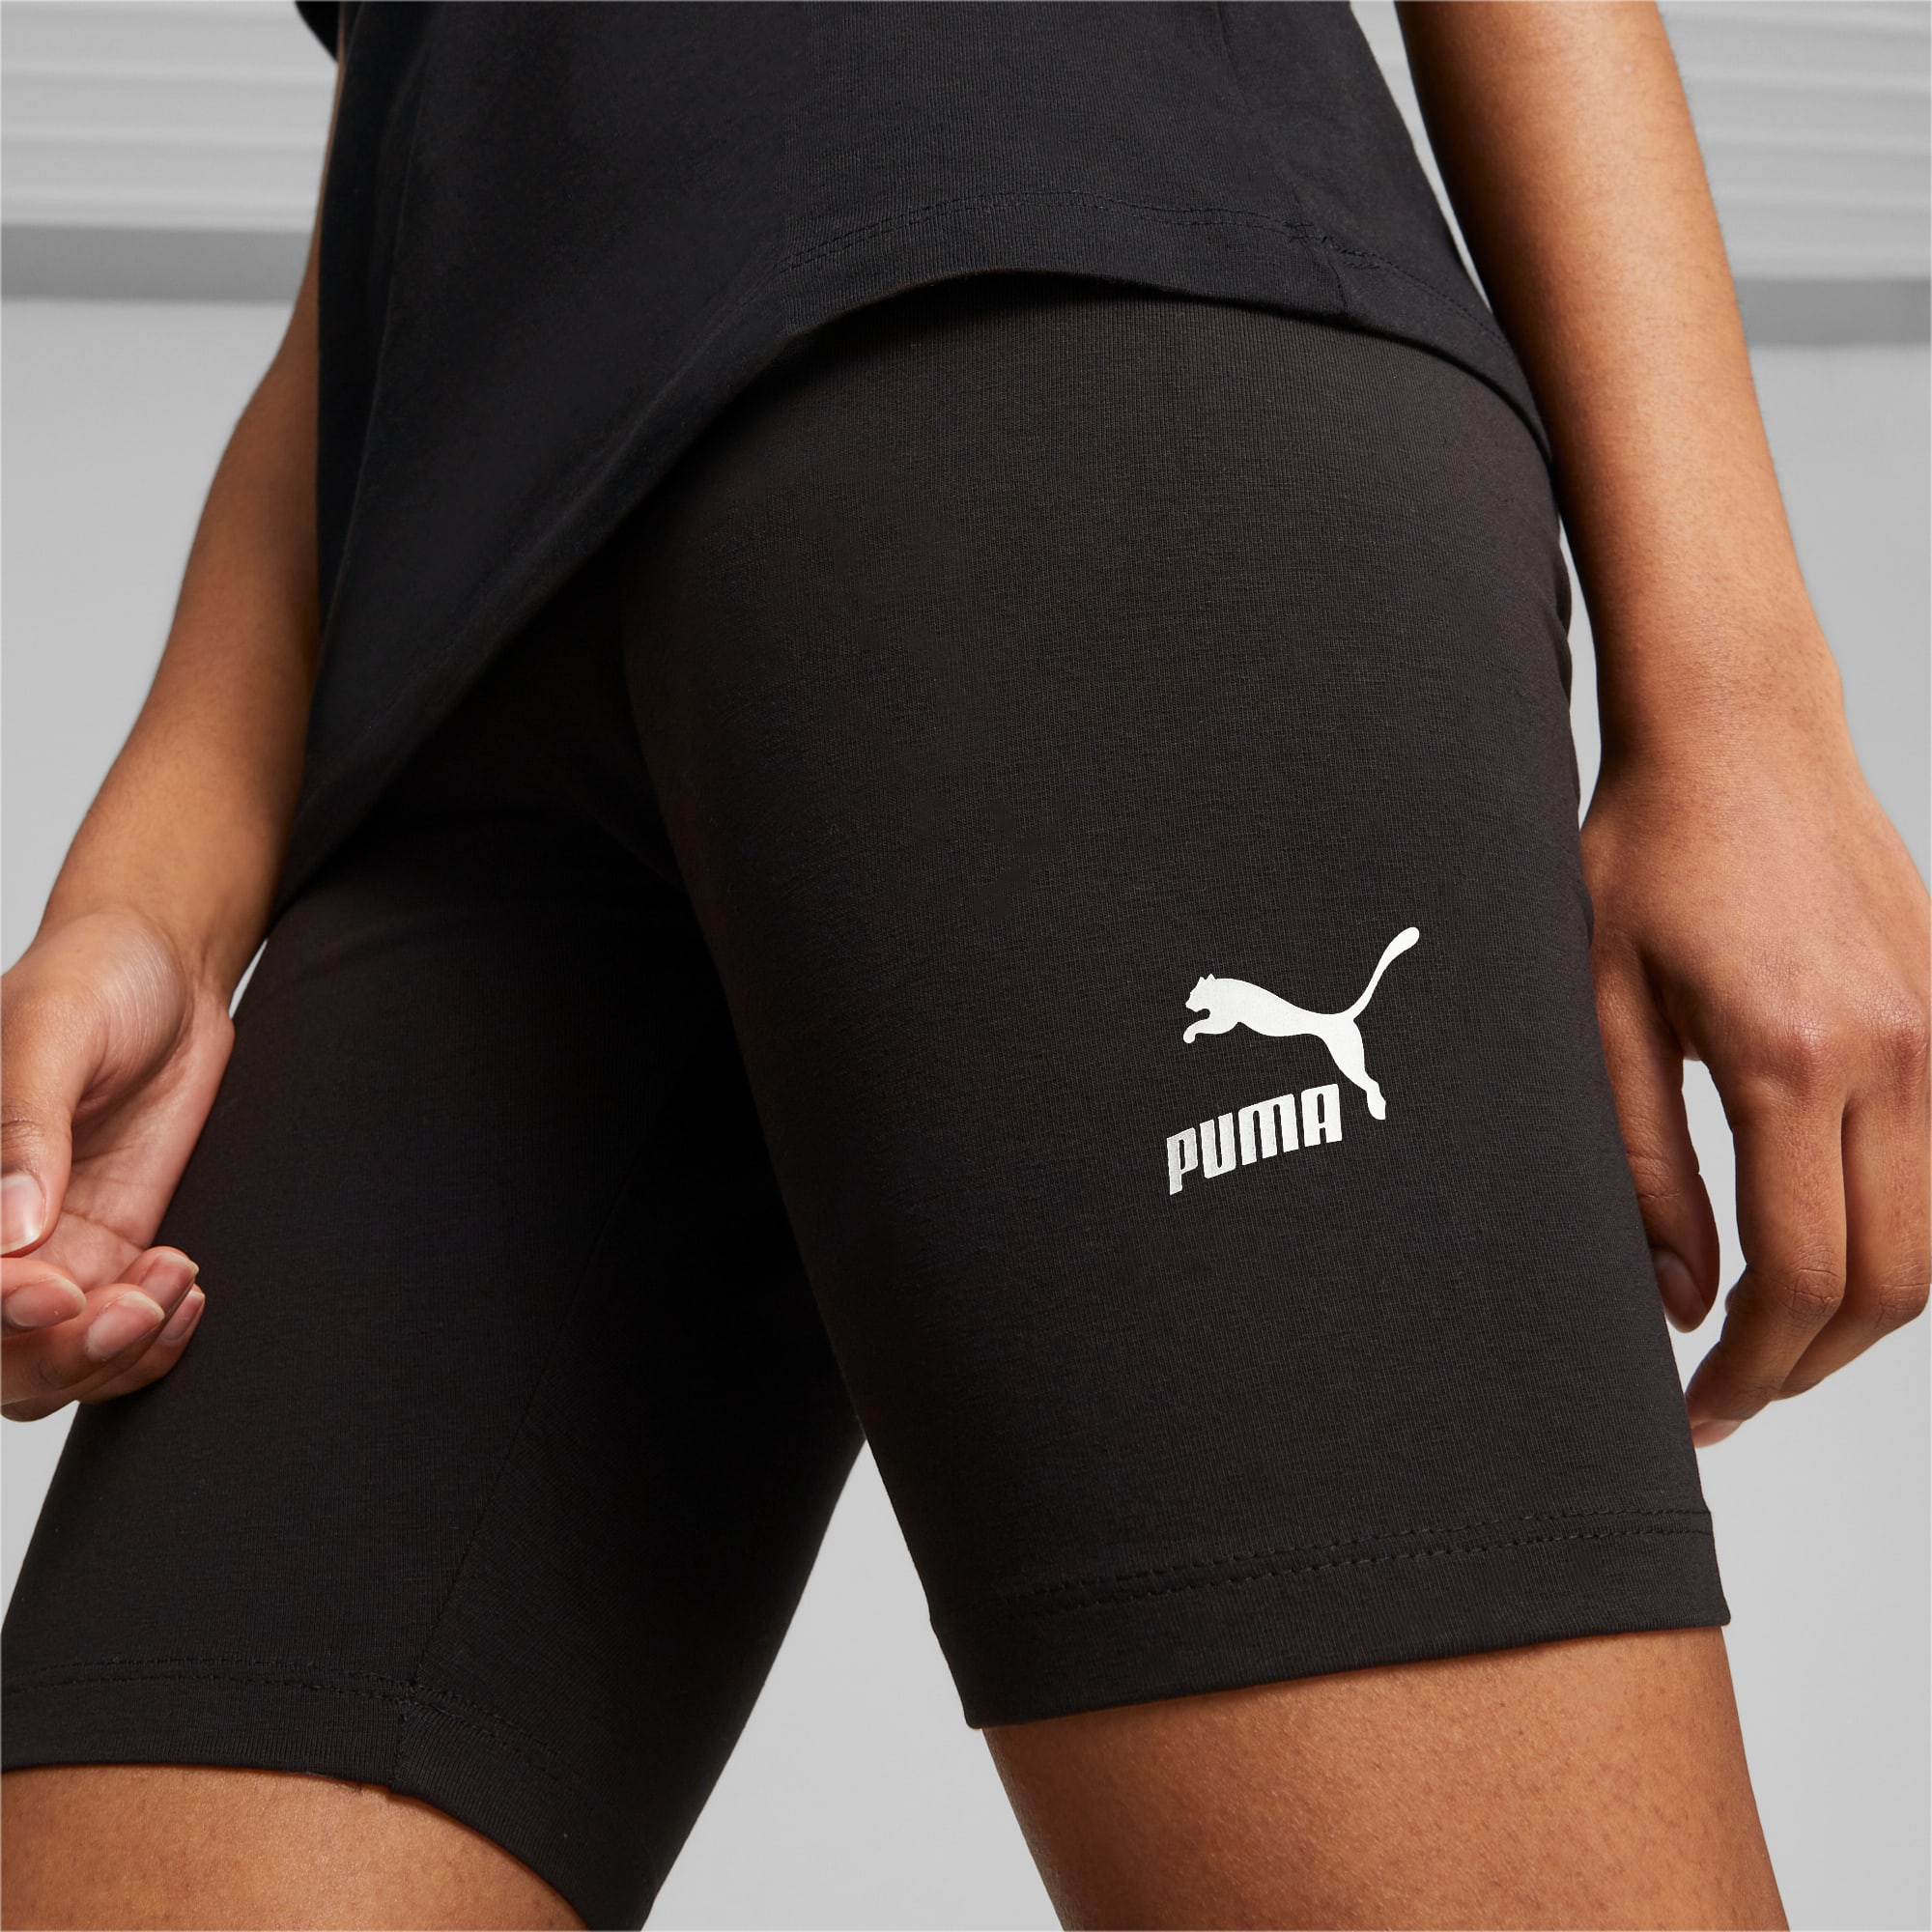 PUMA Ess 7 Logo Short Leggings - Cycling shorts